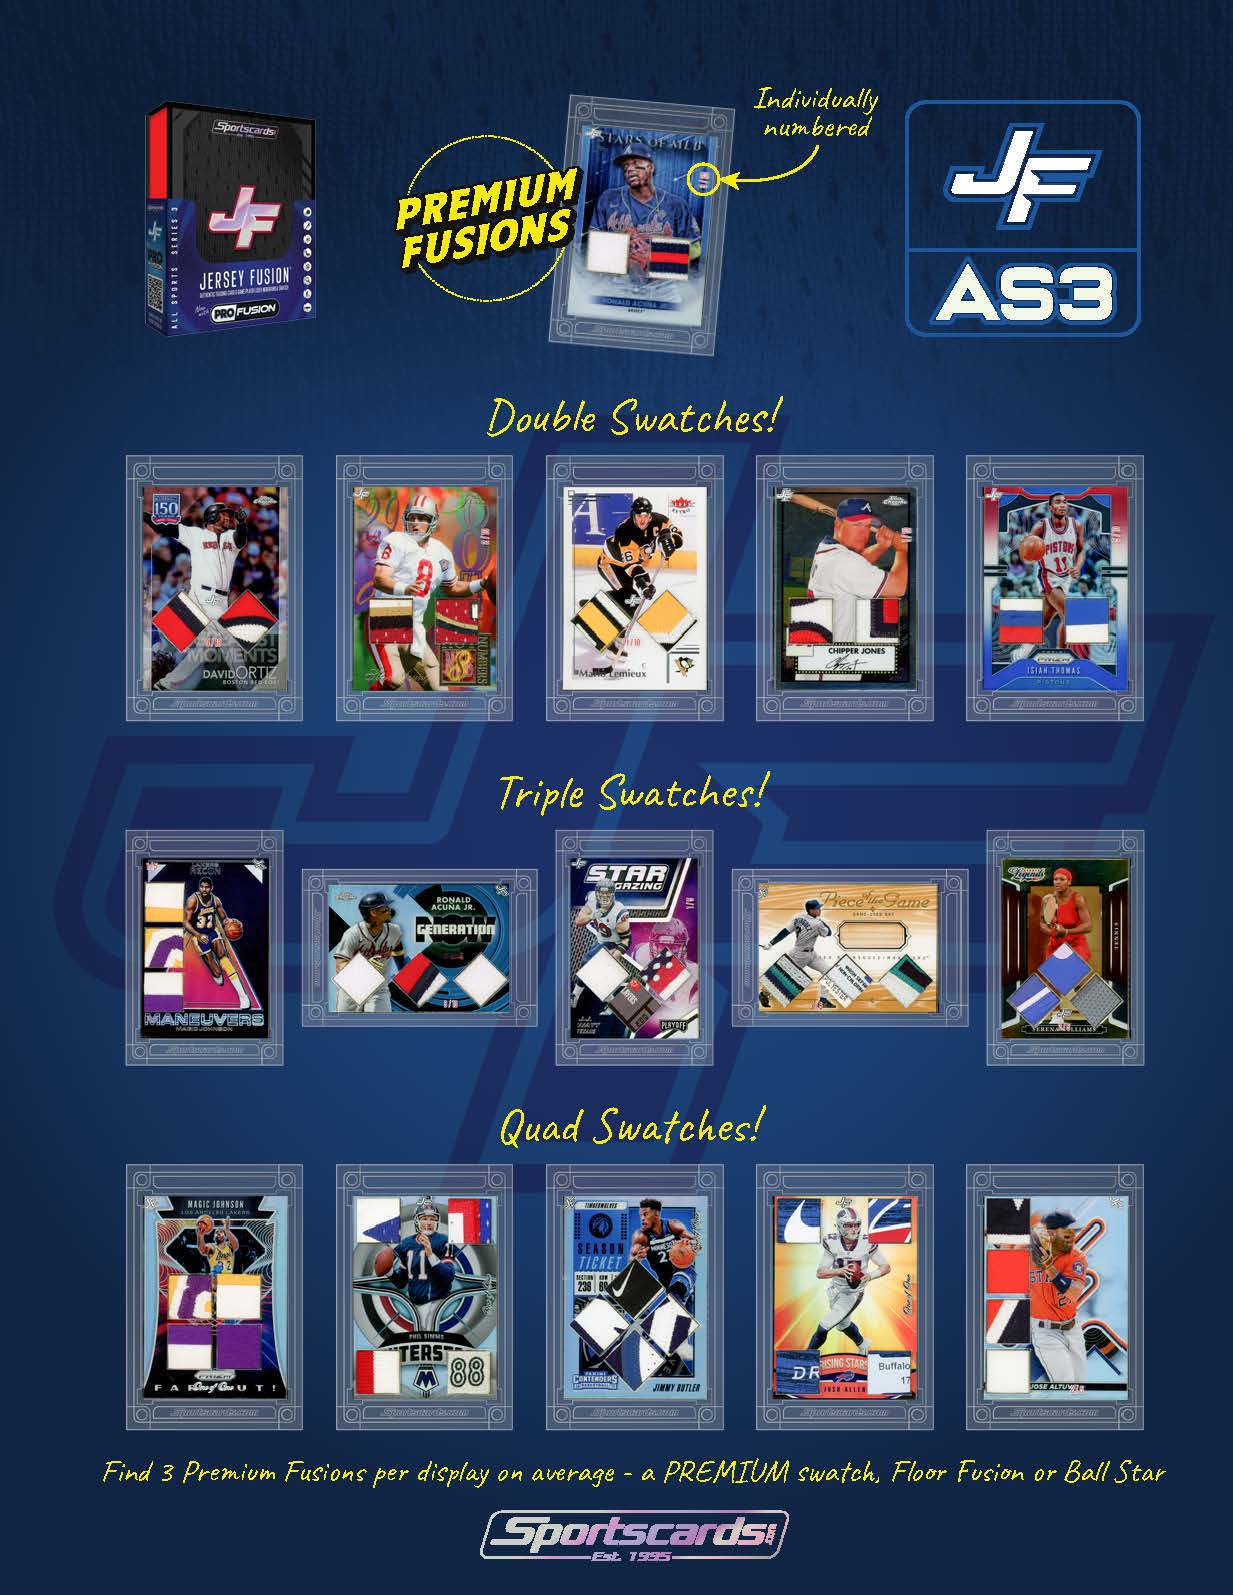 Jersey Fusion All Sports Series 3 Sealed Box - (1) Jersey Fusion Per Box